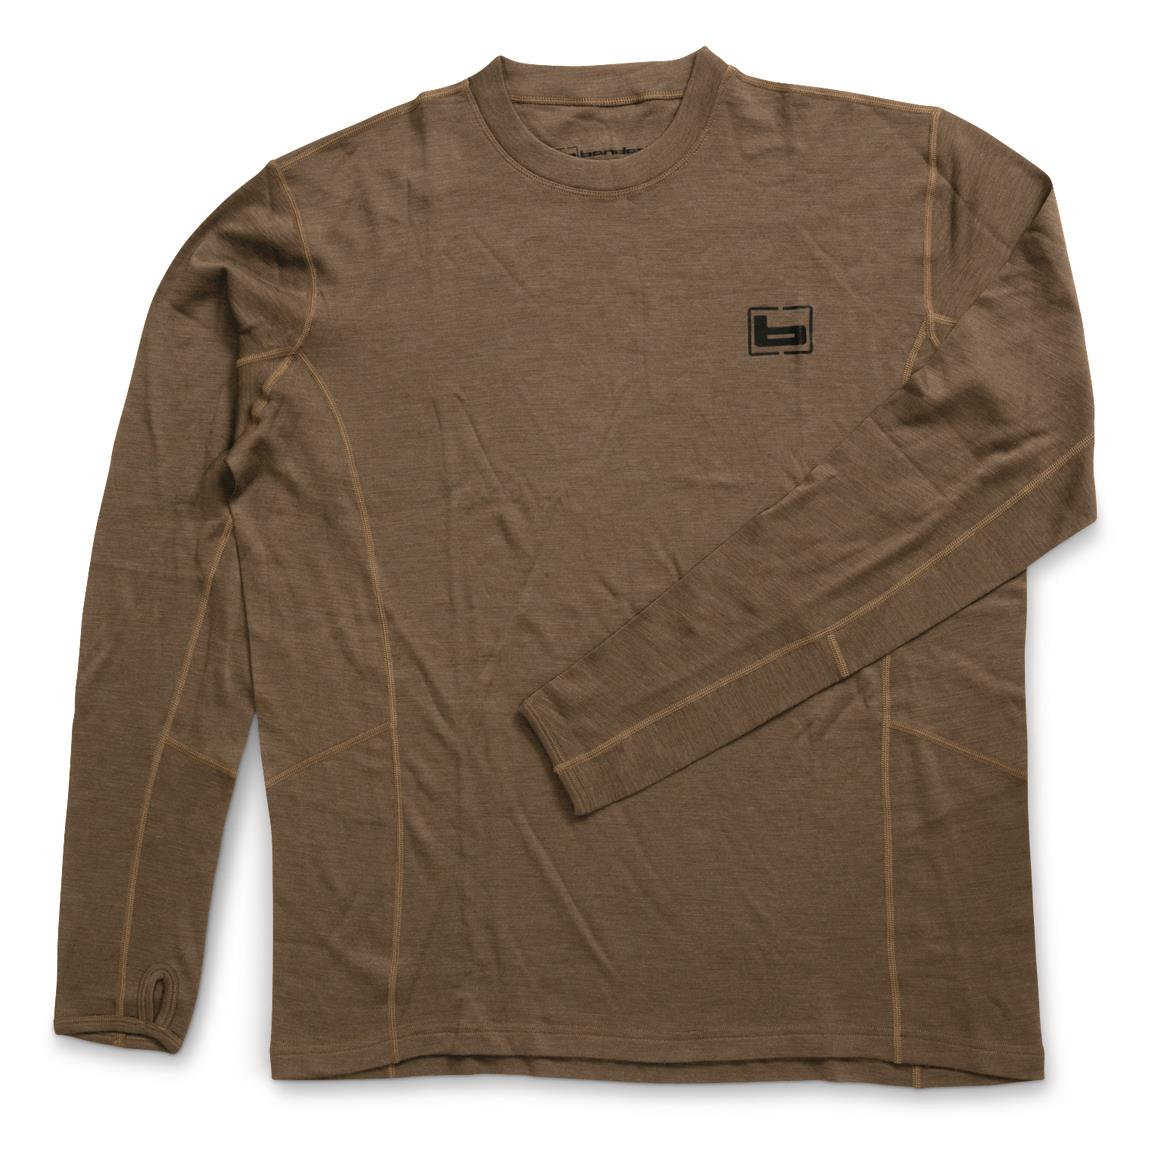 Banded Men's Merino Wool Crew Base Layer Shirt, Chocolate